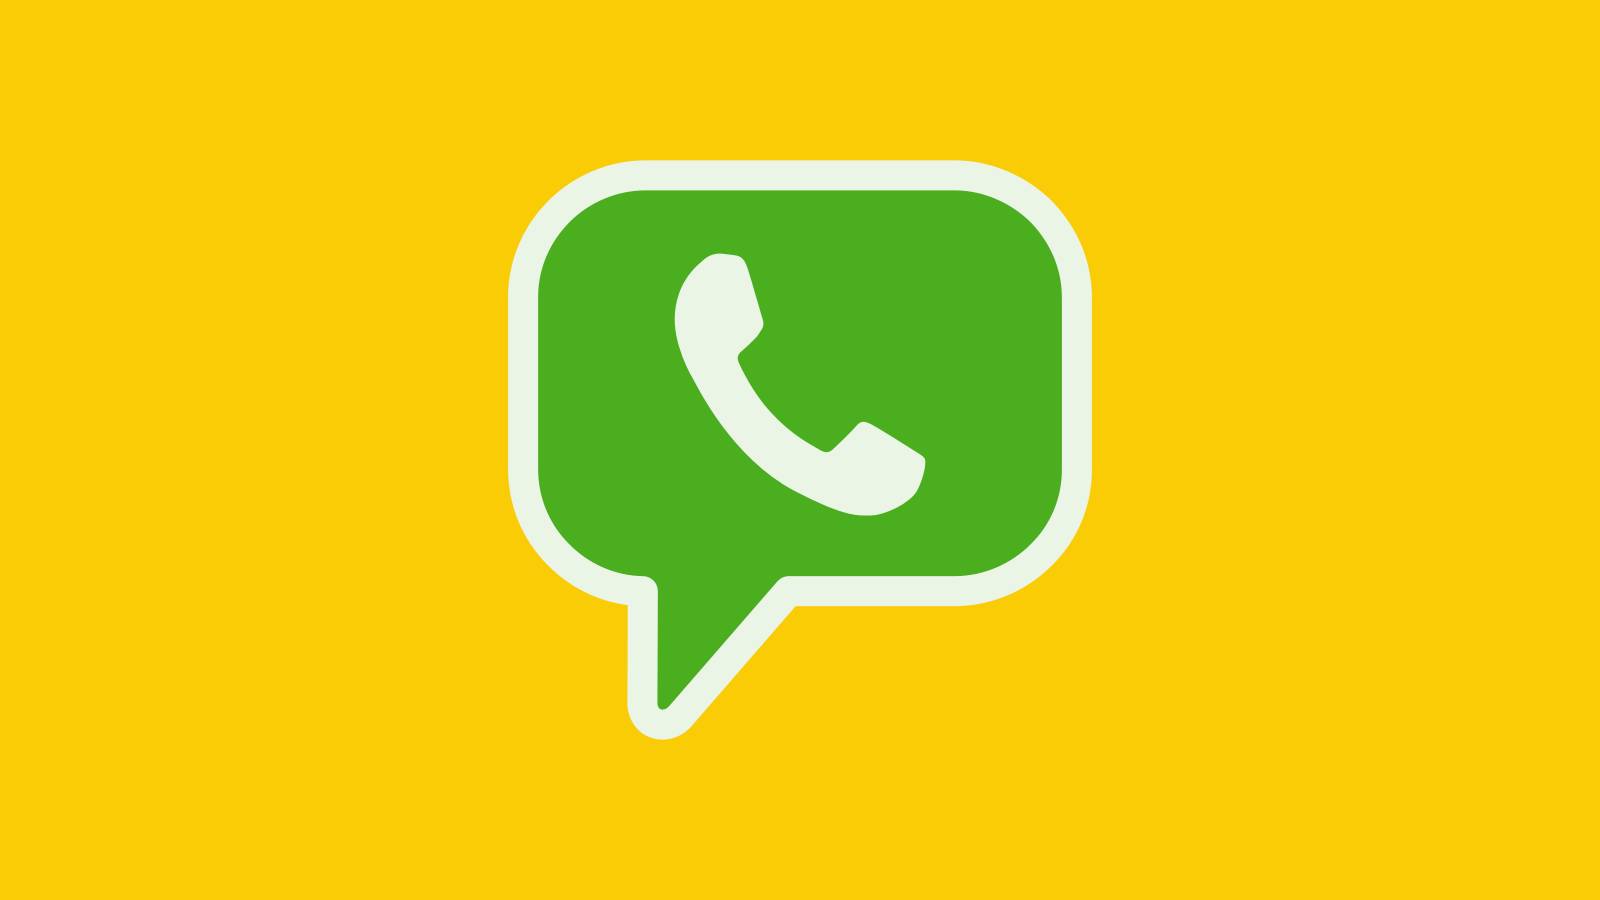 WhatsApp-probleemtelefoons